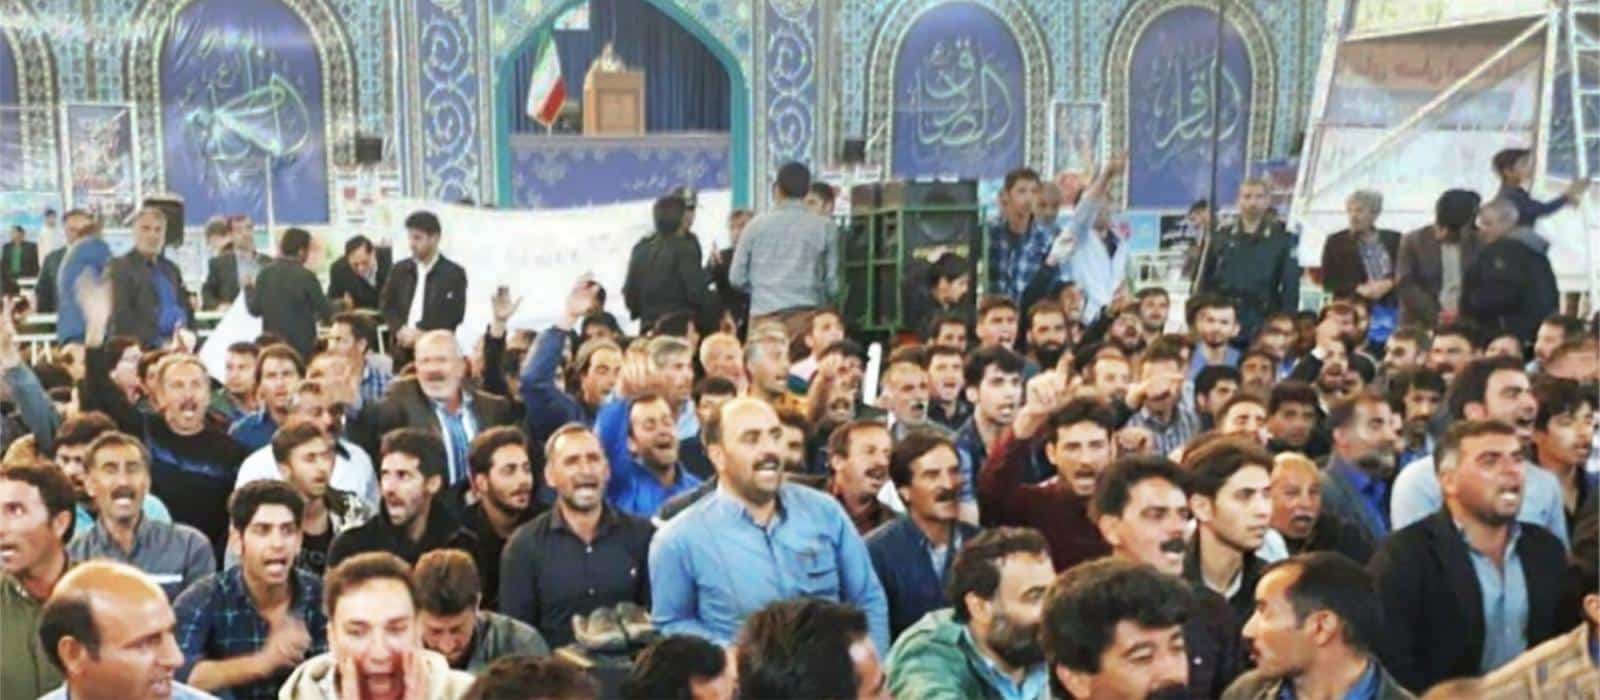 iran-kazeroon-2018-friday-prayer-sermon